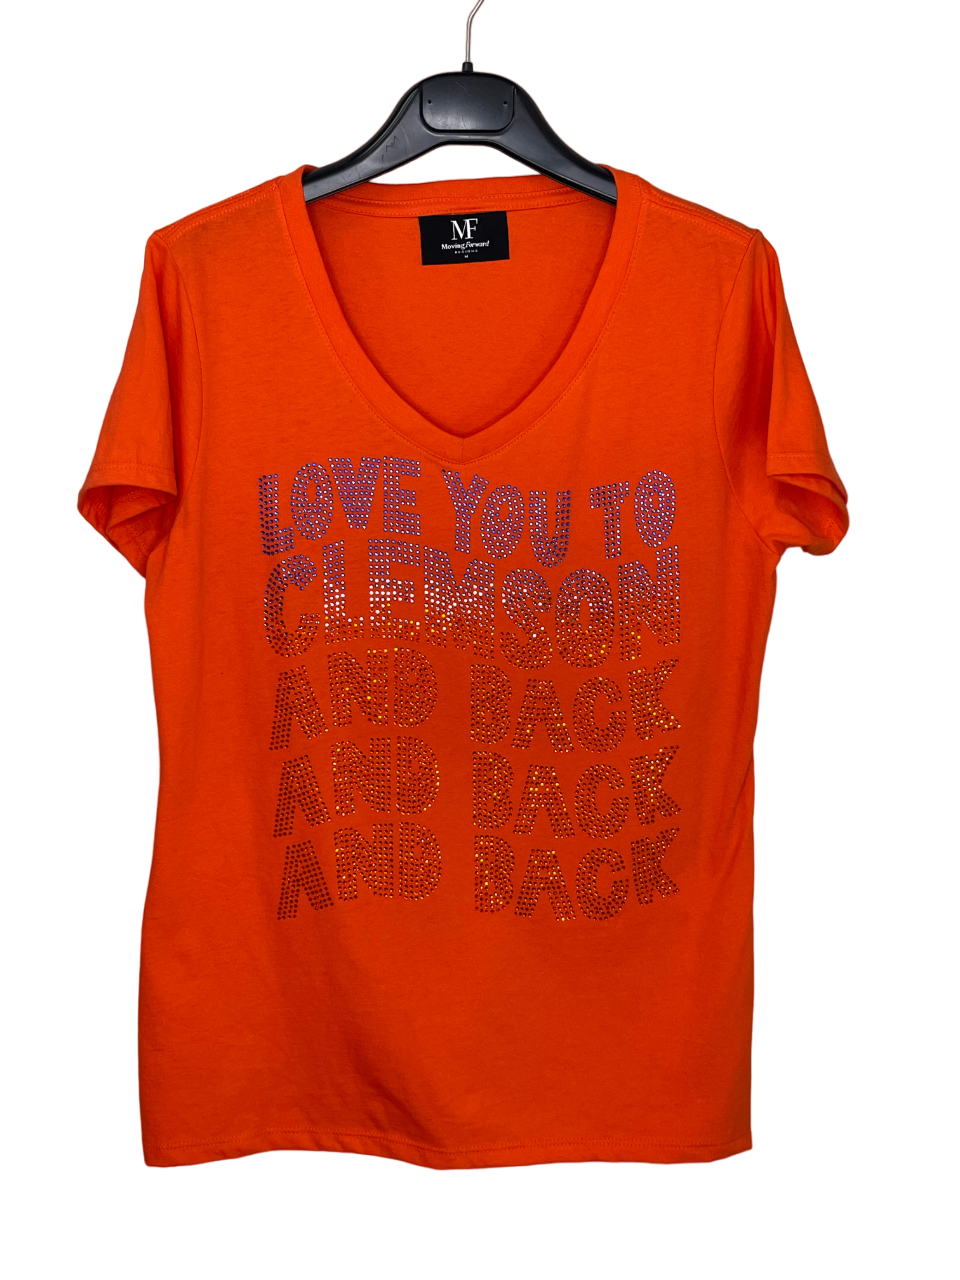 Game Day T-Shirt, Short Sleeve V-Neck Orange, Clemson and Back